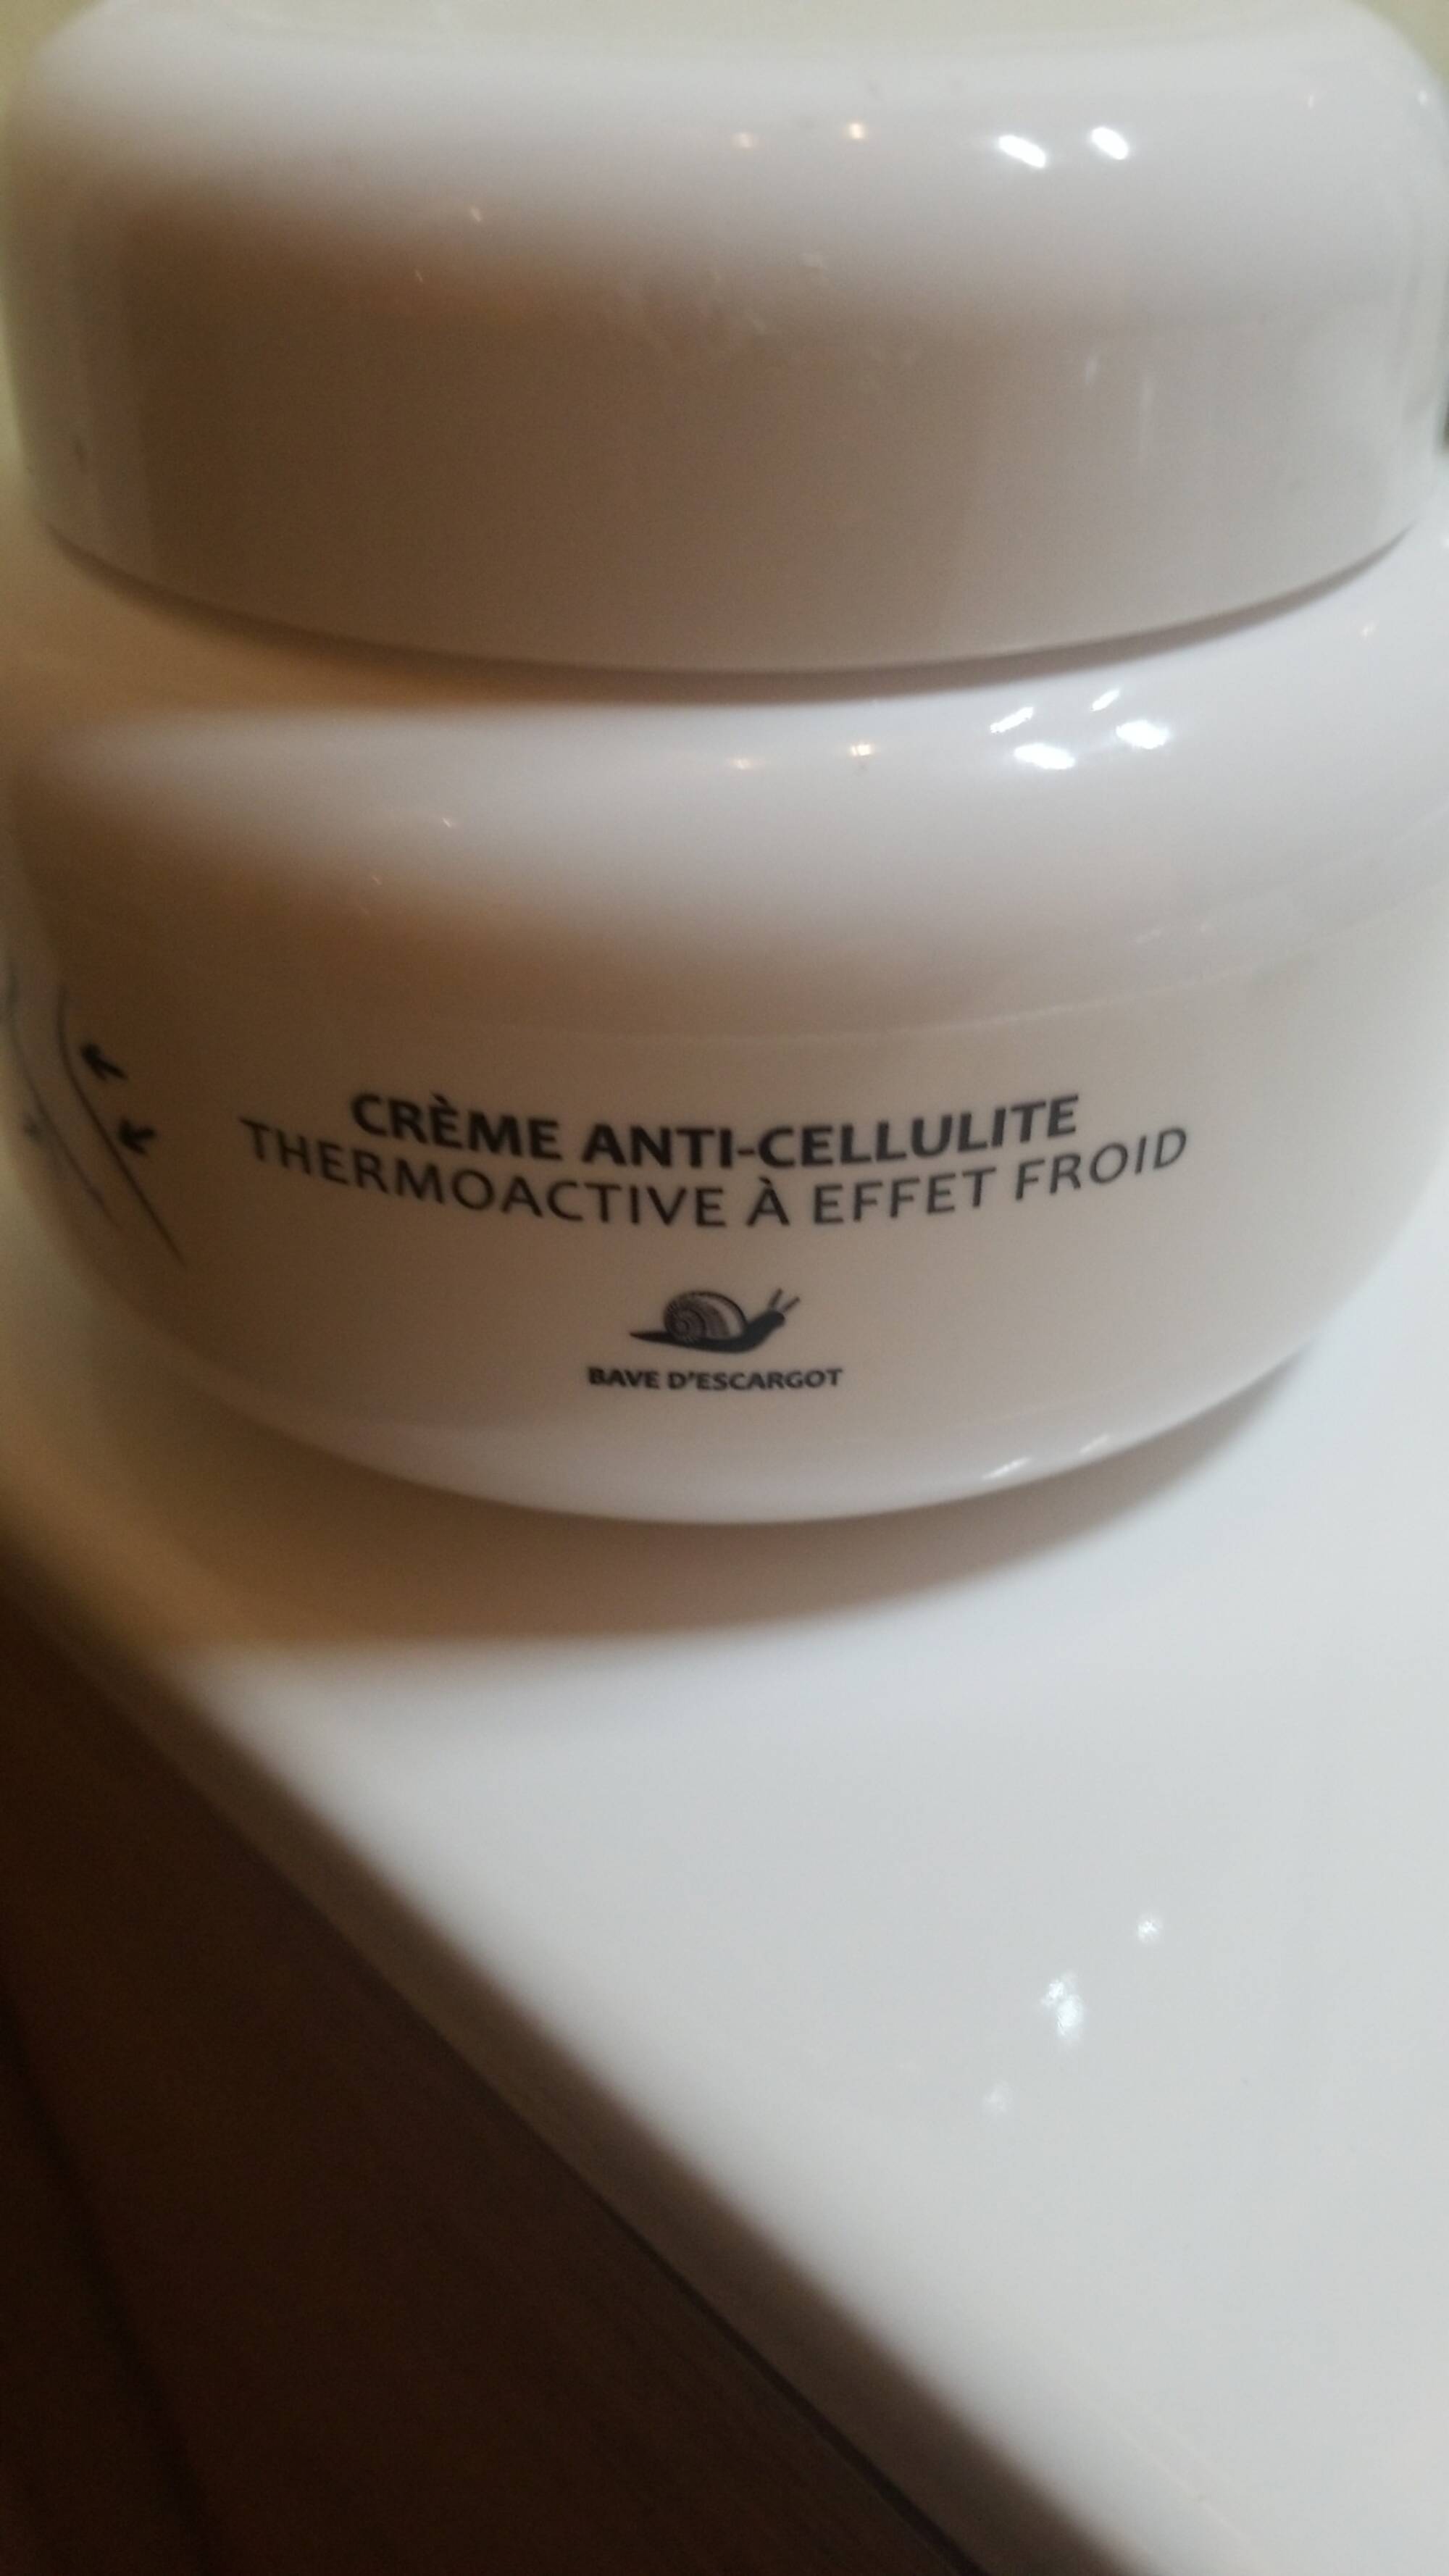 SILHOUETTE BY S - Bave d'escargot - Crème anti-cellulite